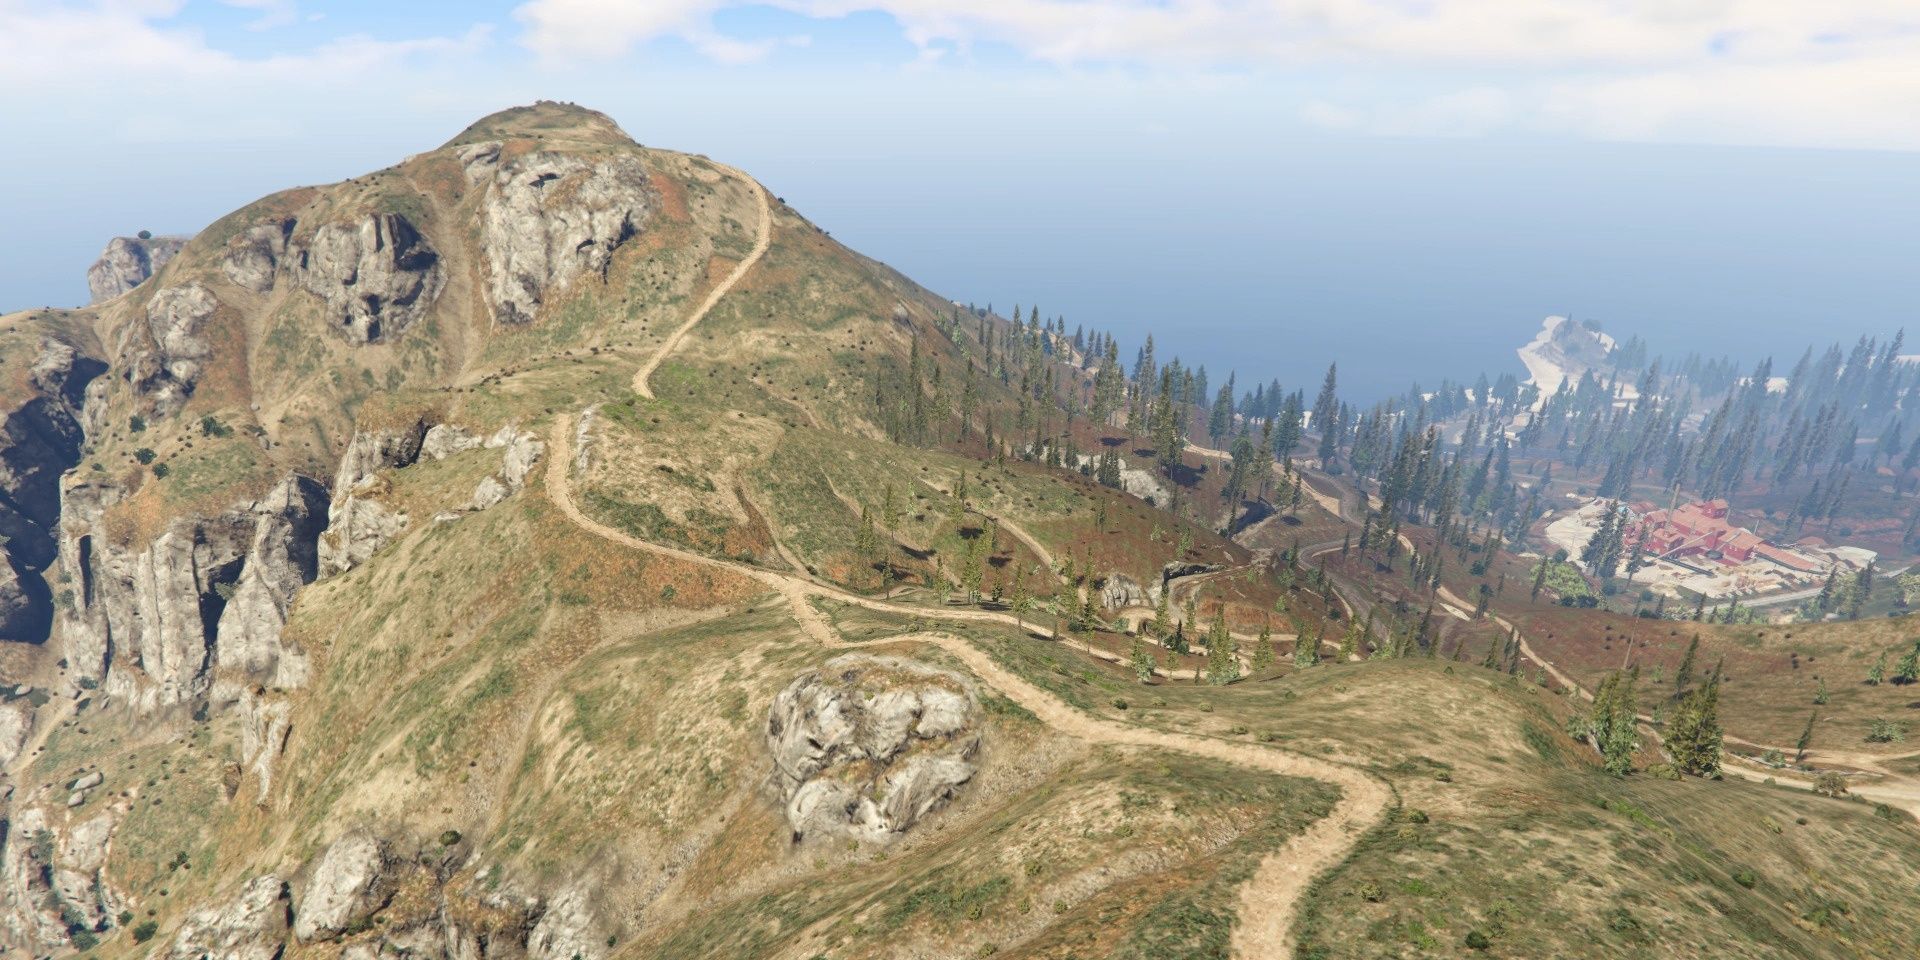 Chiliad Mountain State Wilderness in Grand Theft Auto 5